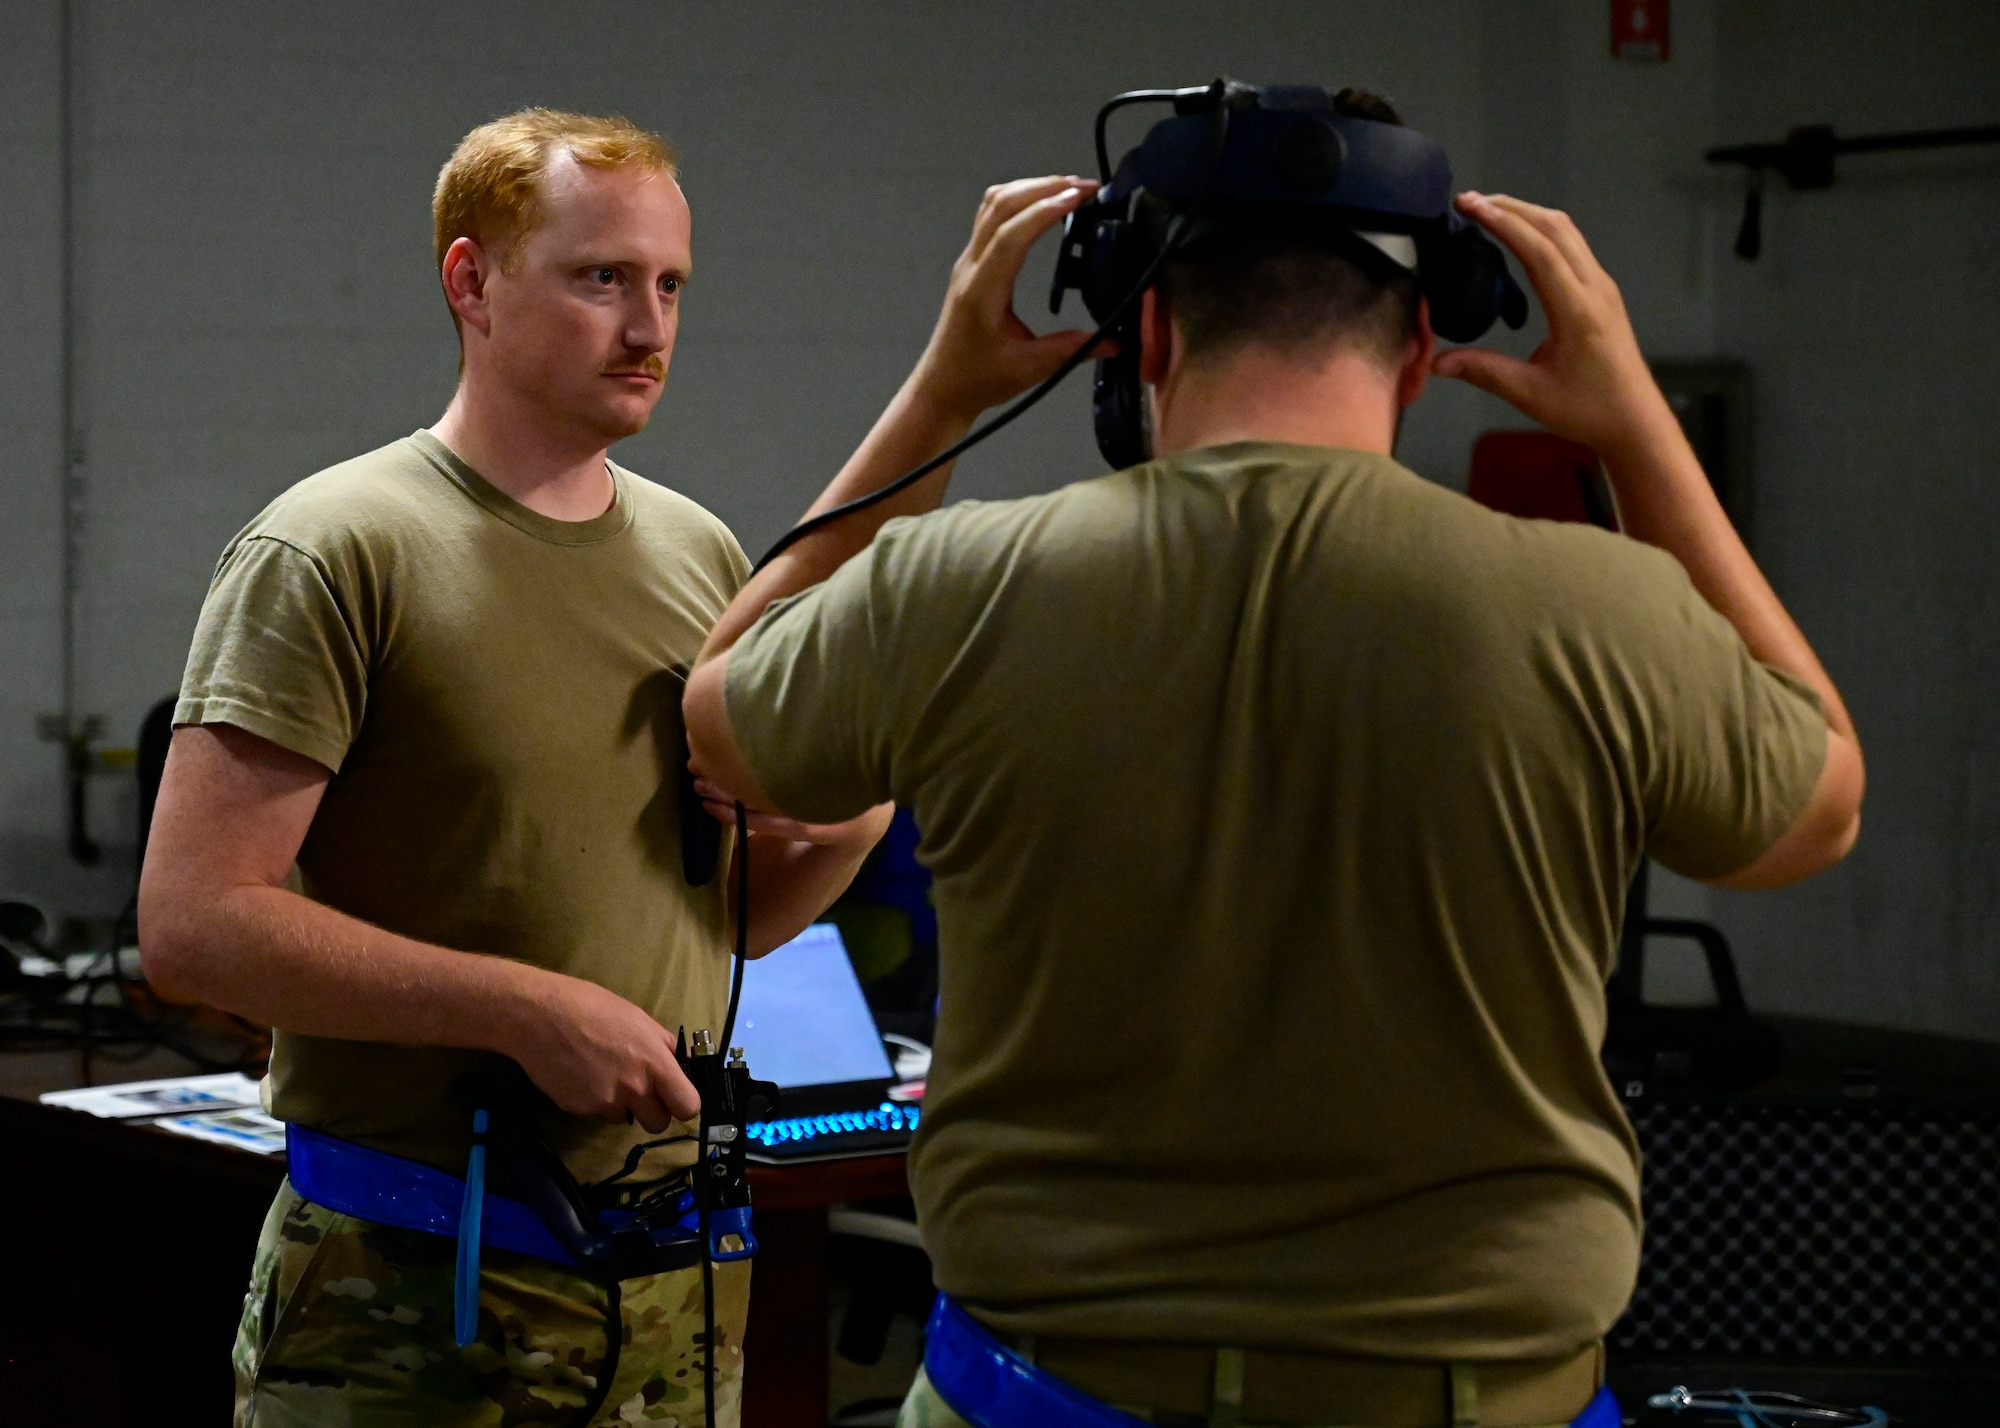 An Airman tests a virtual reality headset.